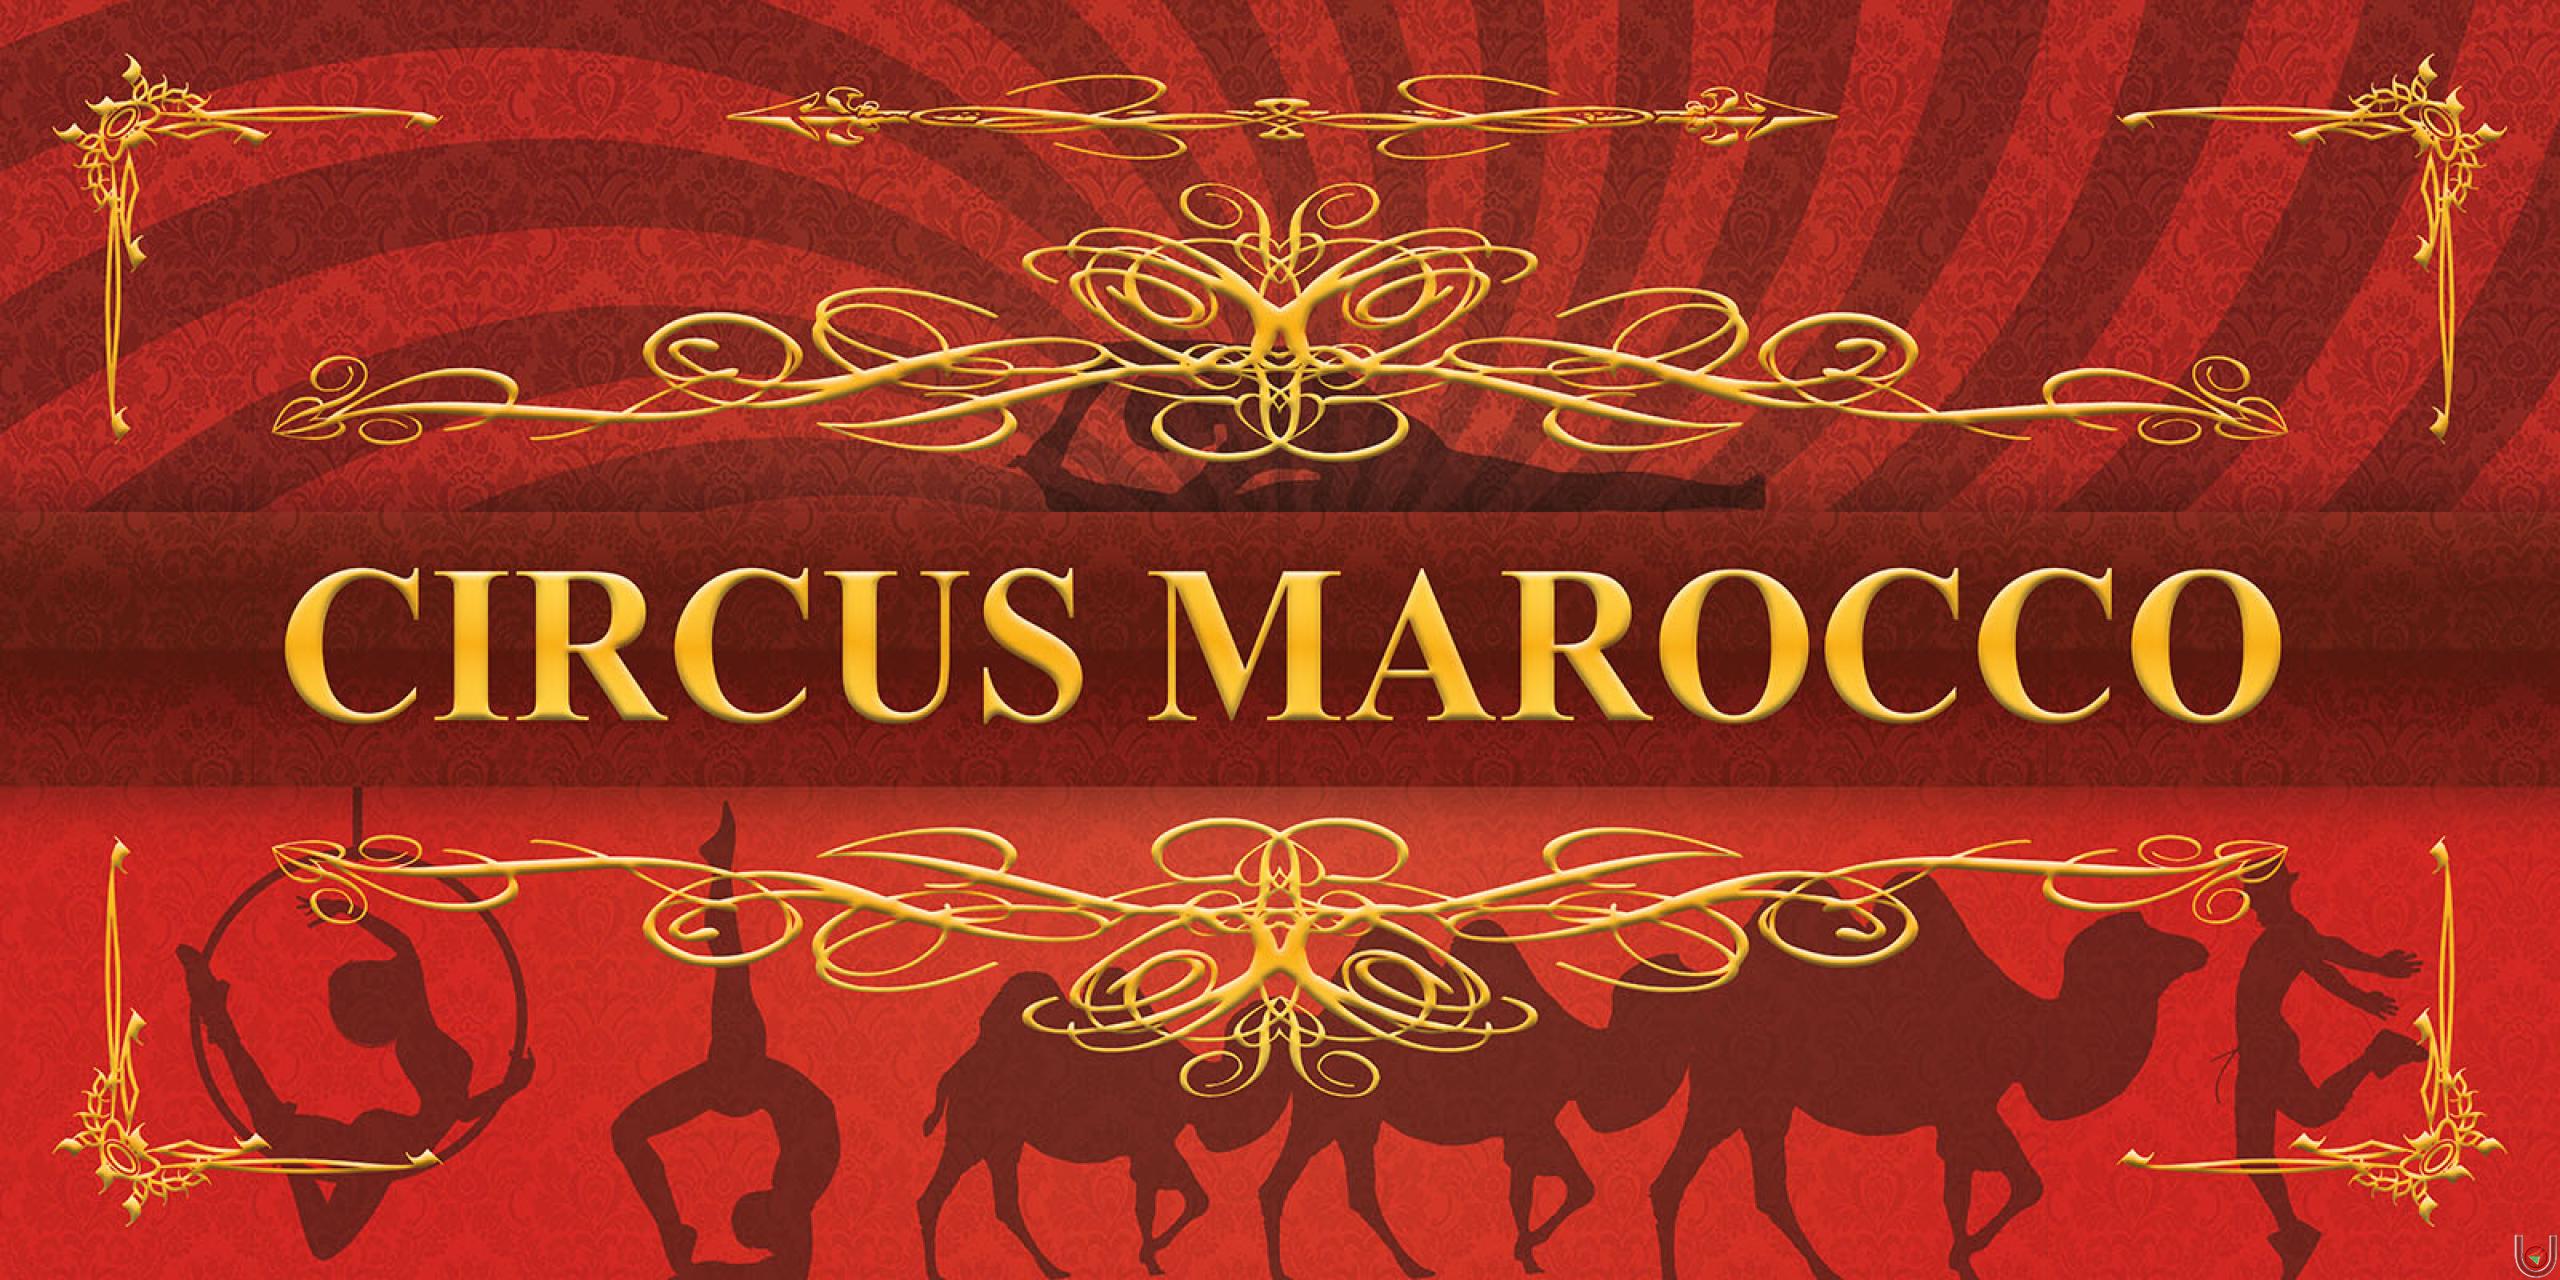 Circus Marocco